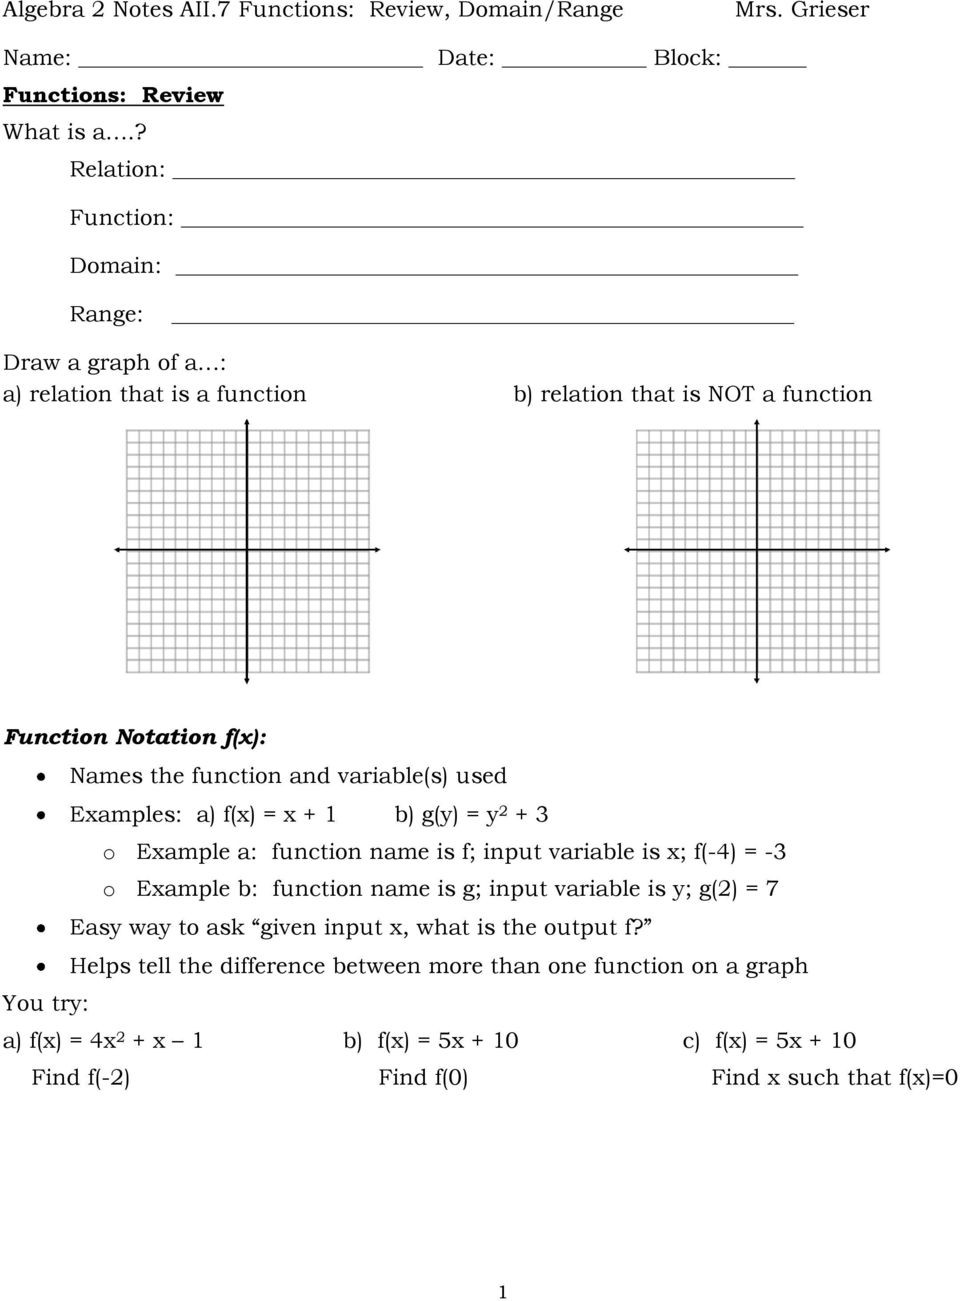 Algebra 1 Function Notation Worksheet Algebra 2 Notes Aii 7 Functions Review Domain Range